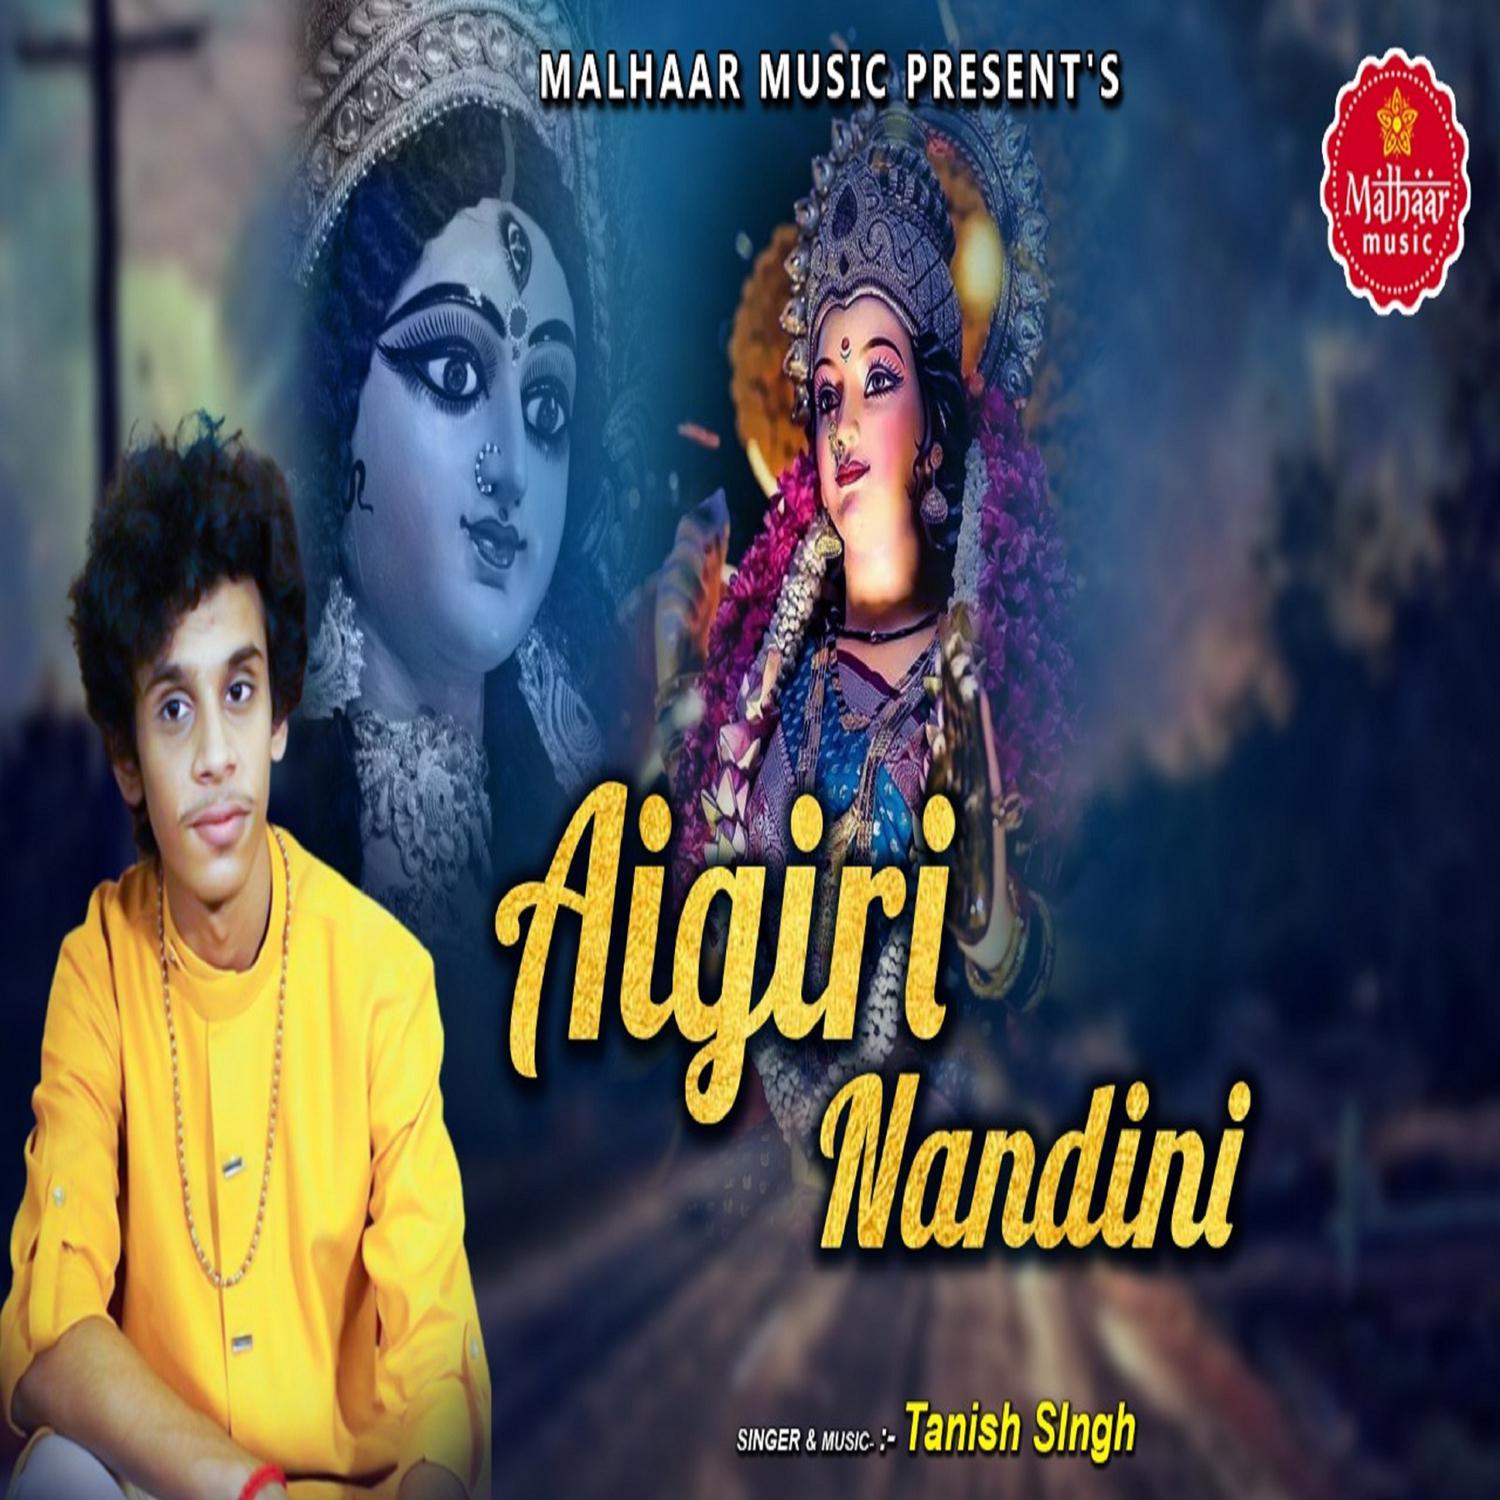 Tanish singh - Aigiri Nandini